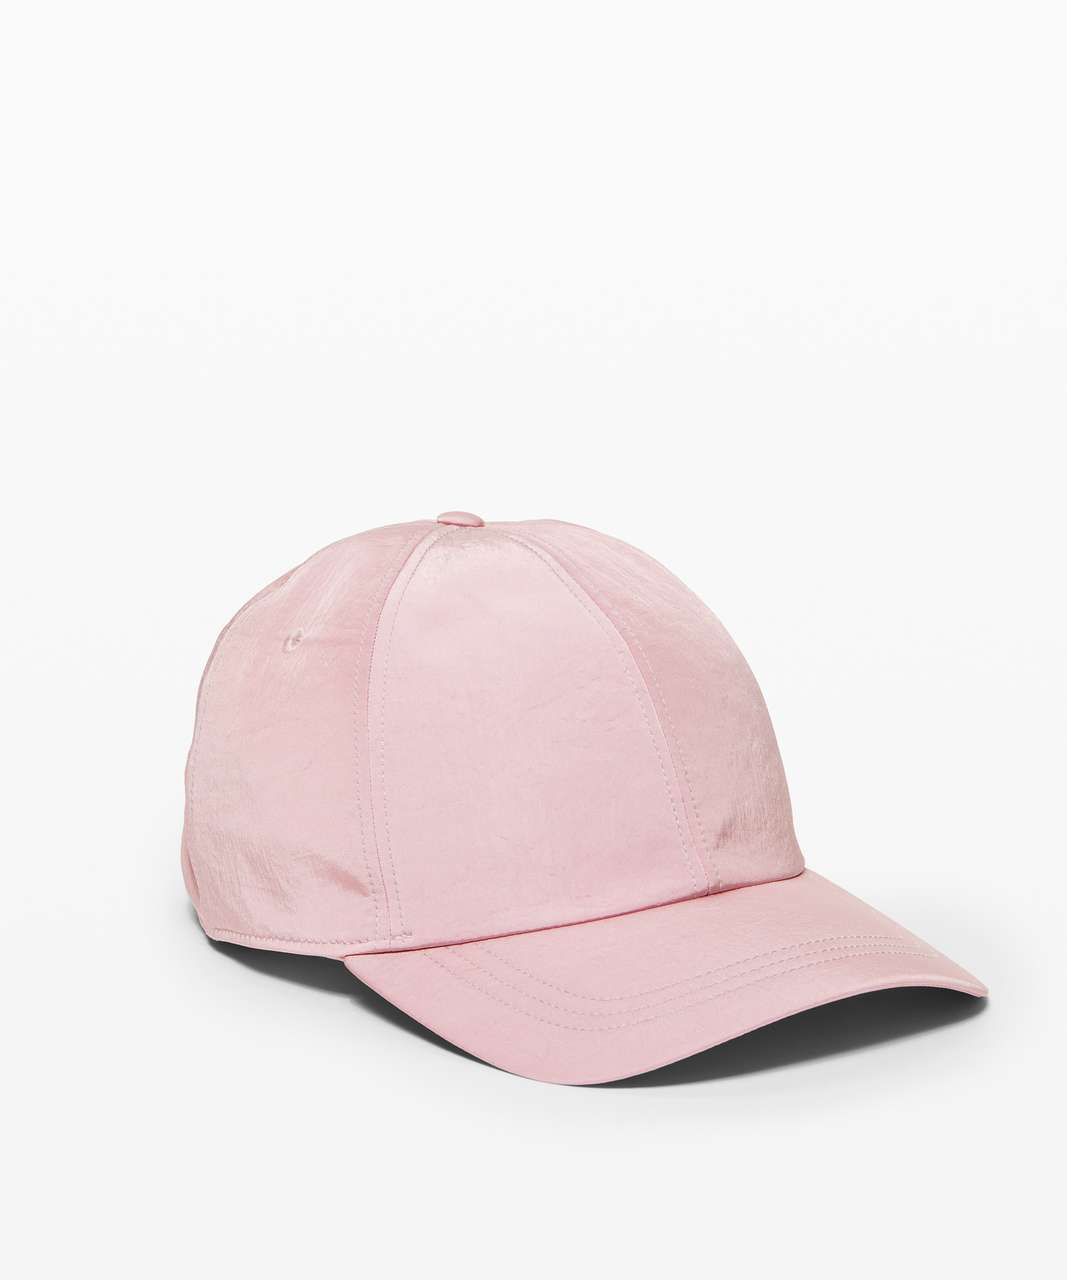 Lululemon Baller Hat II *Soft - Smoky Blush